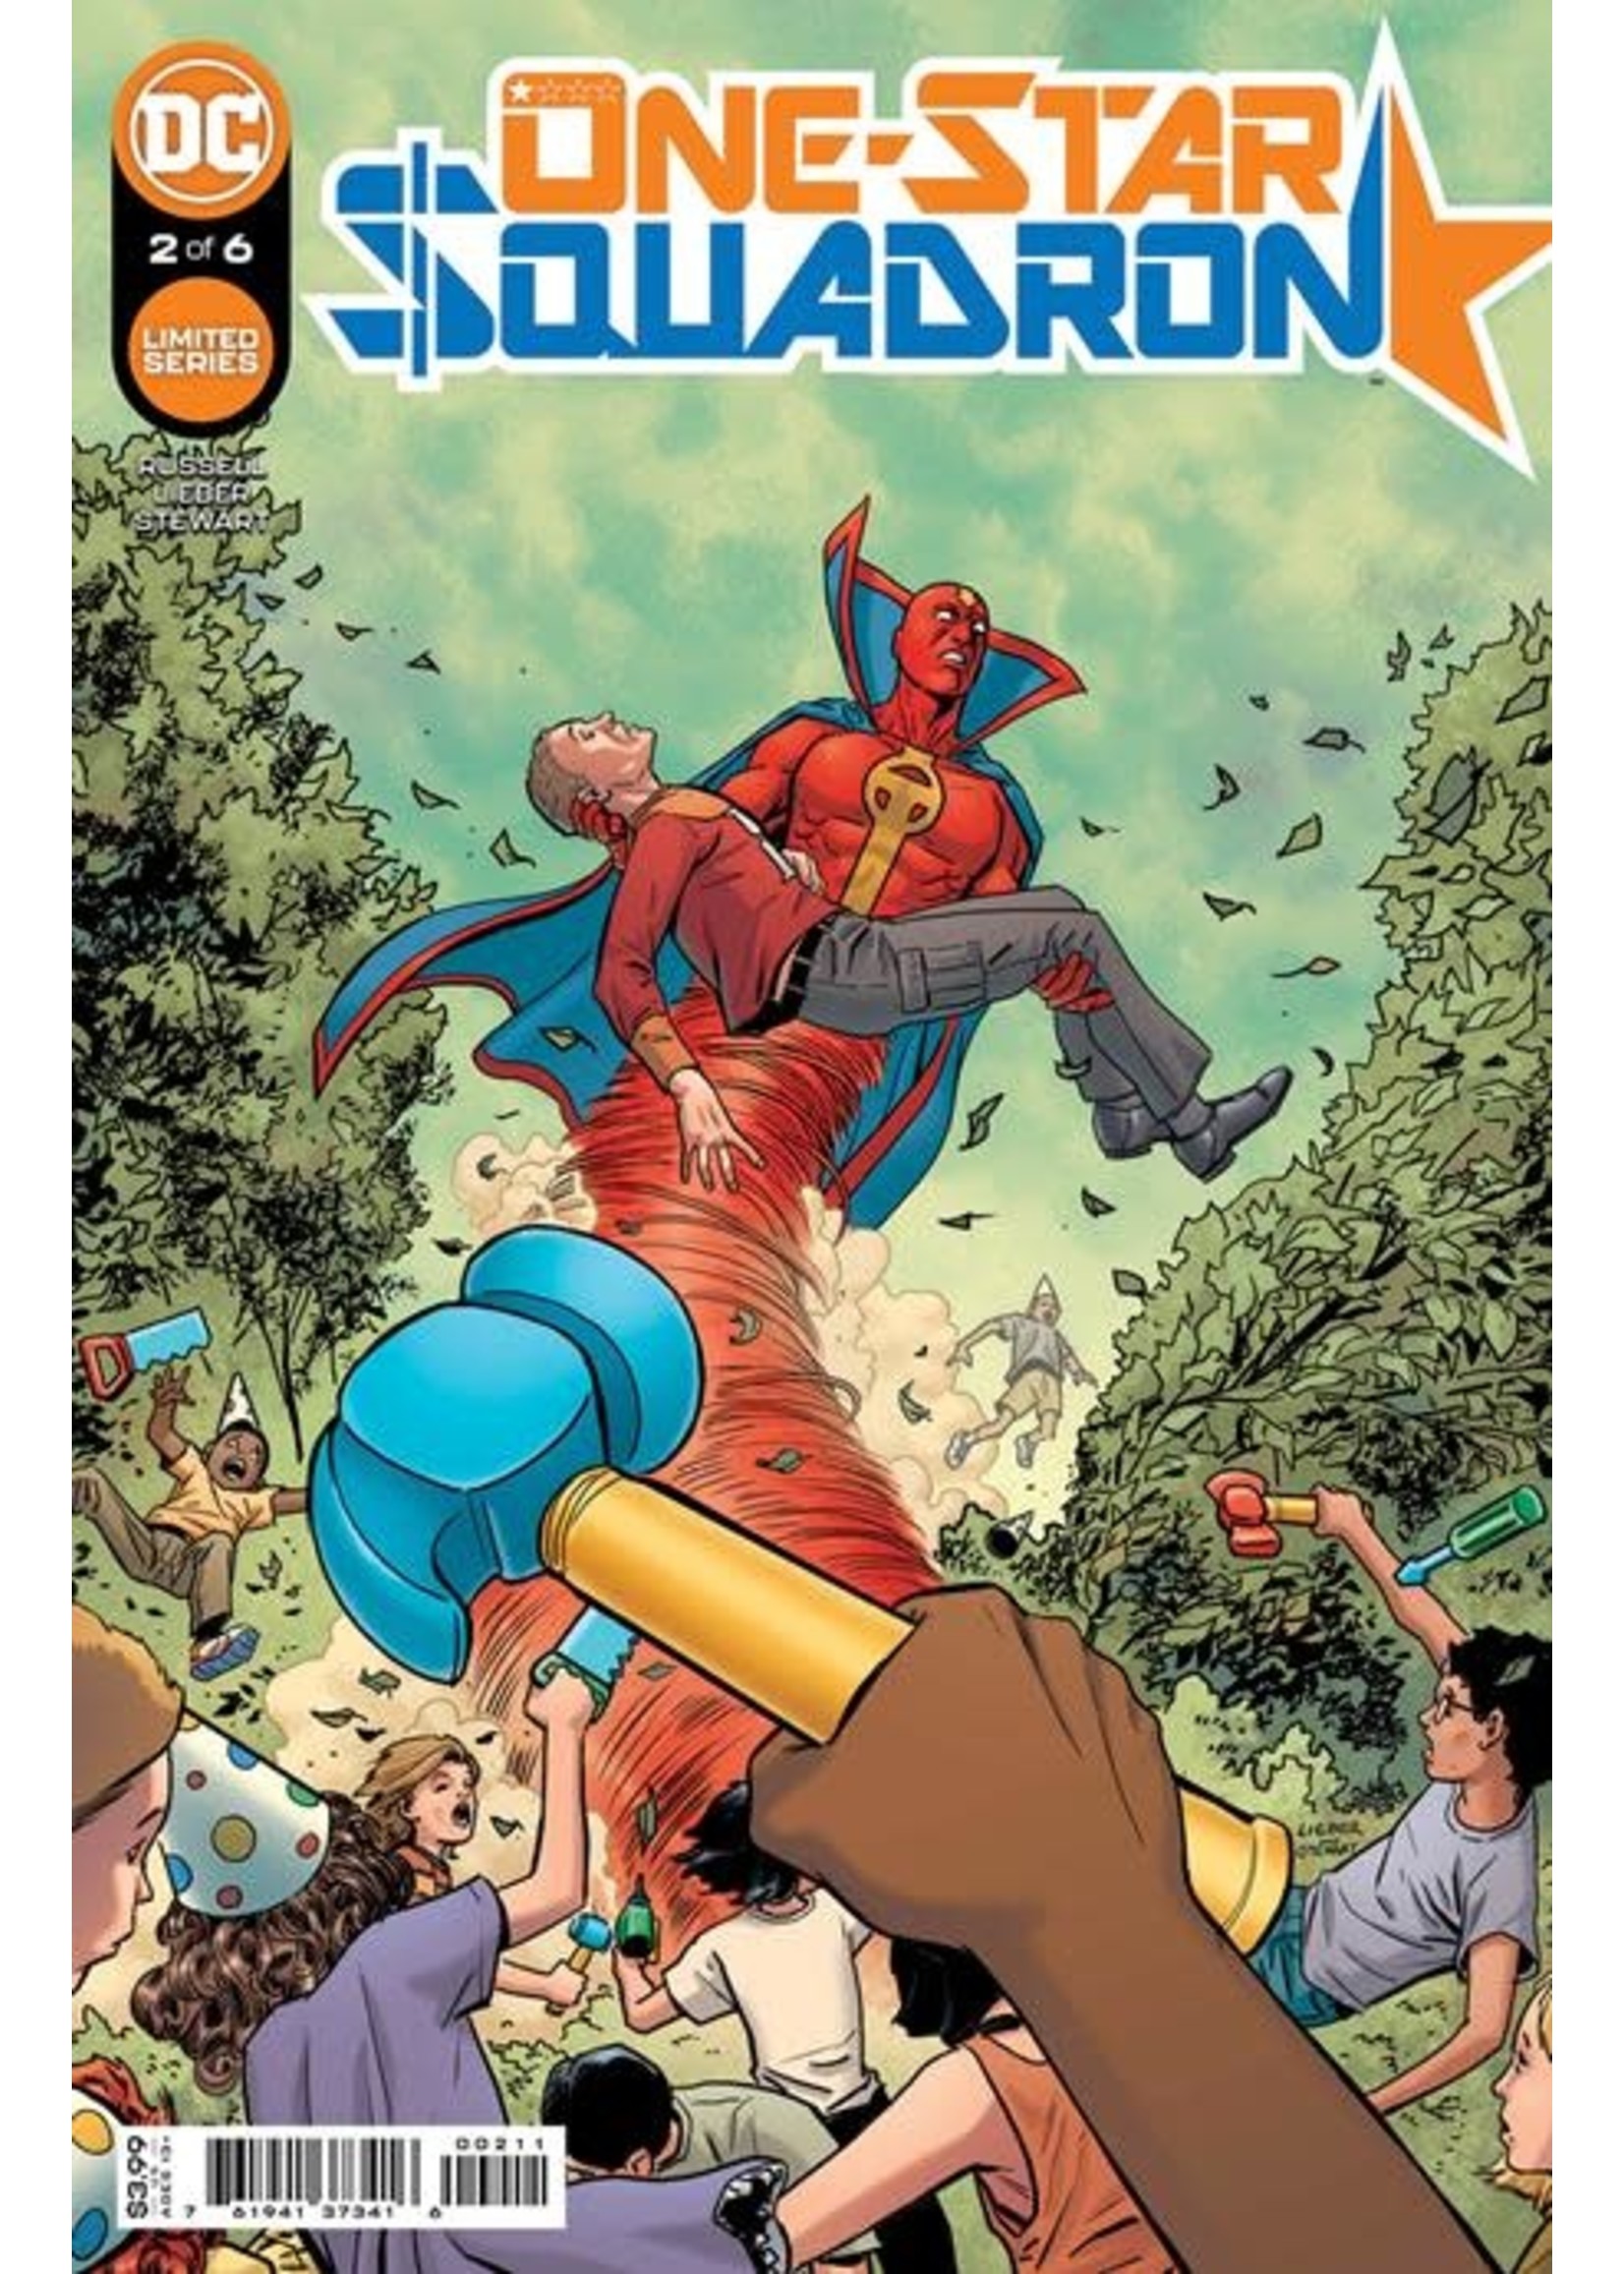 DC COMICS ONE-STAR SQUADRON #2 (OF 6)